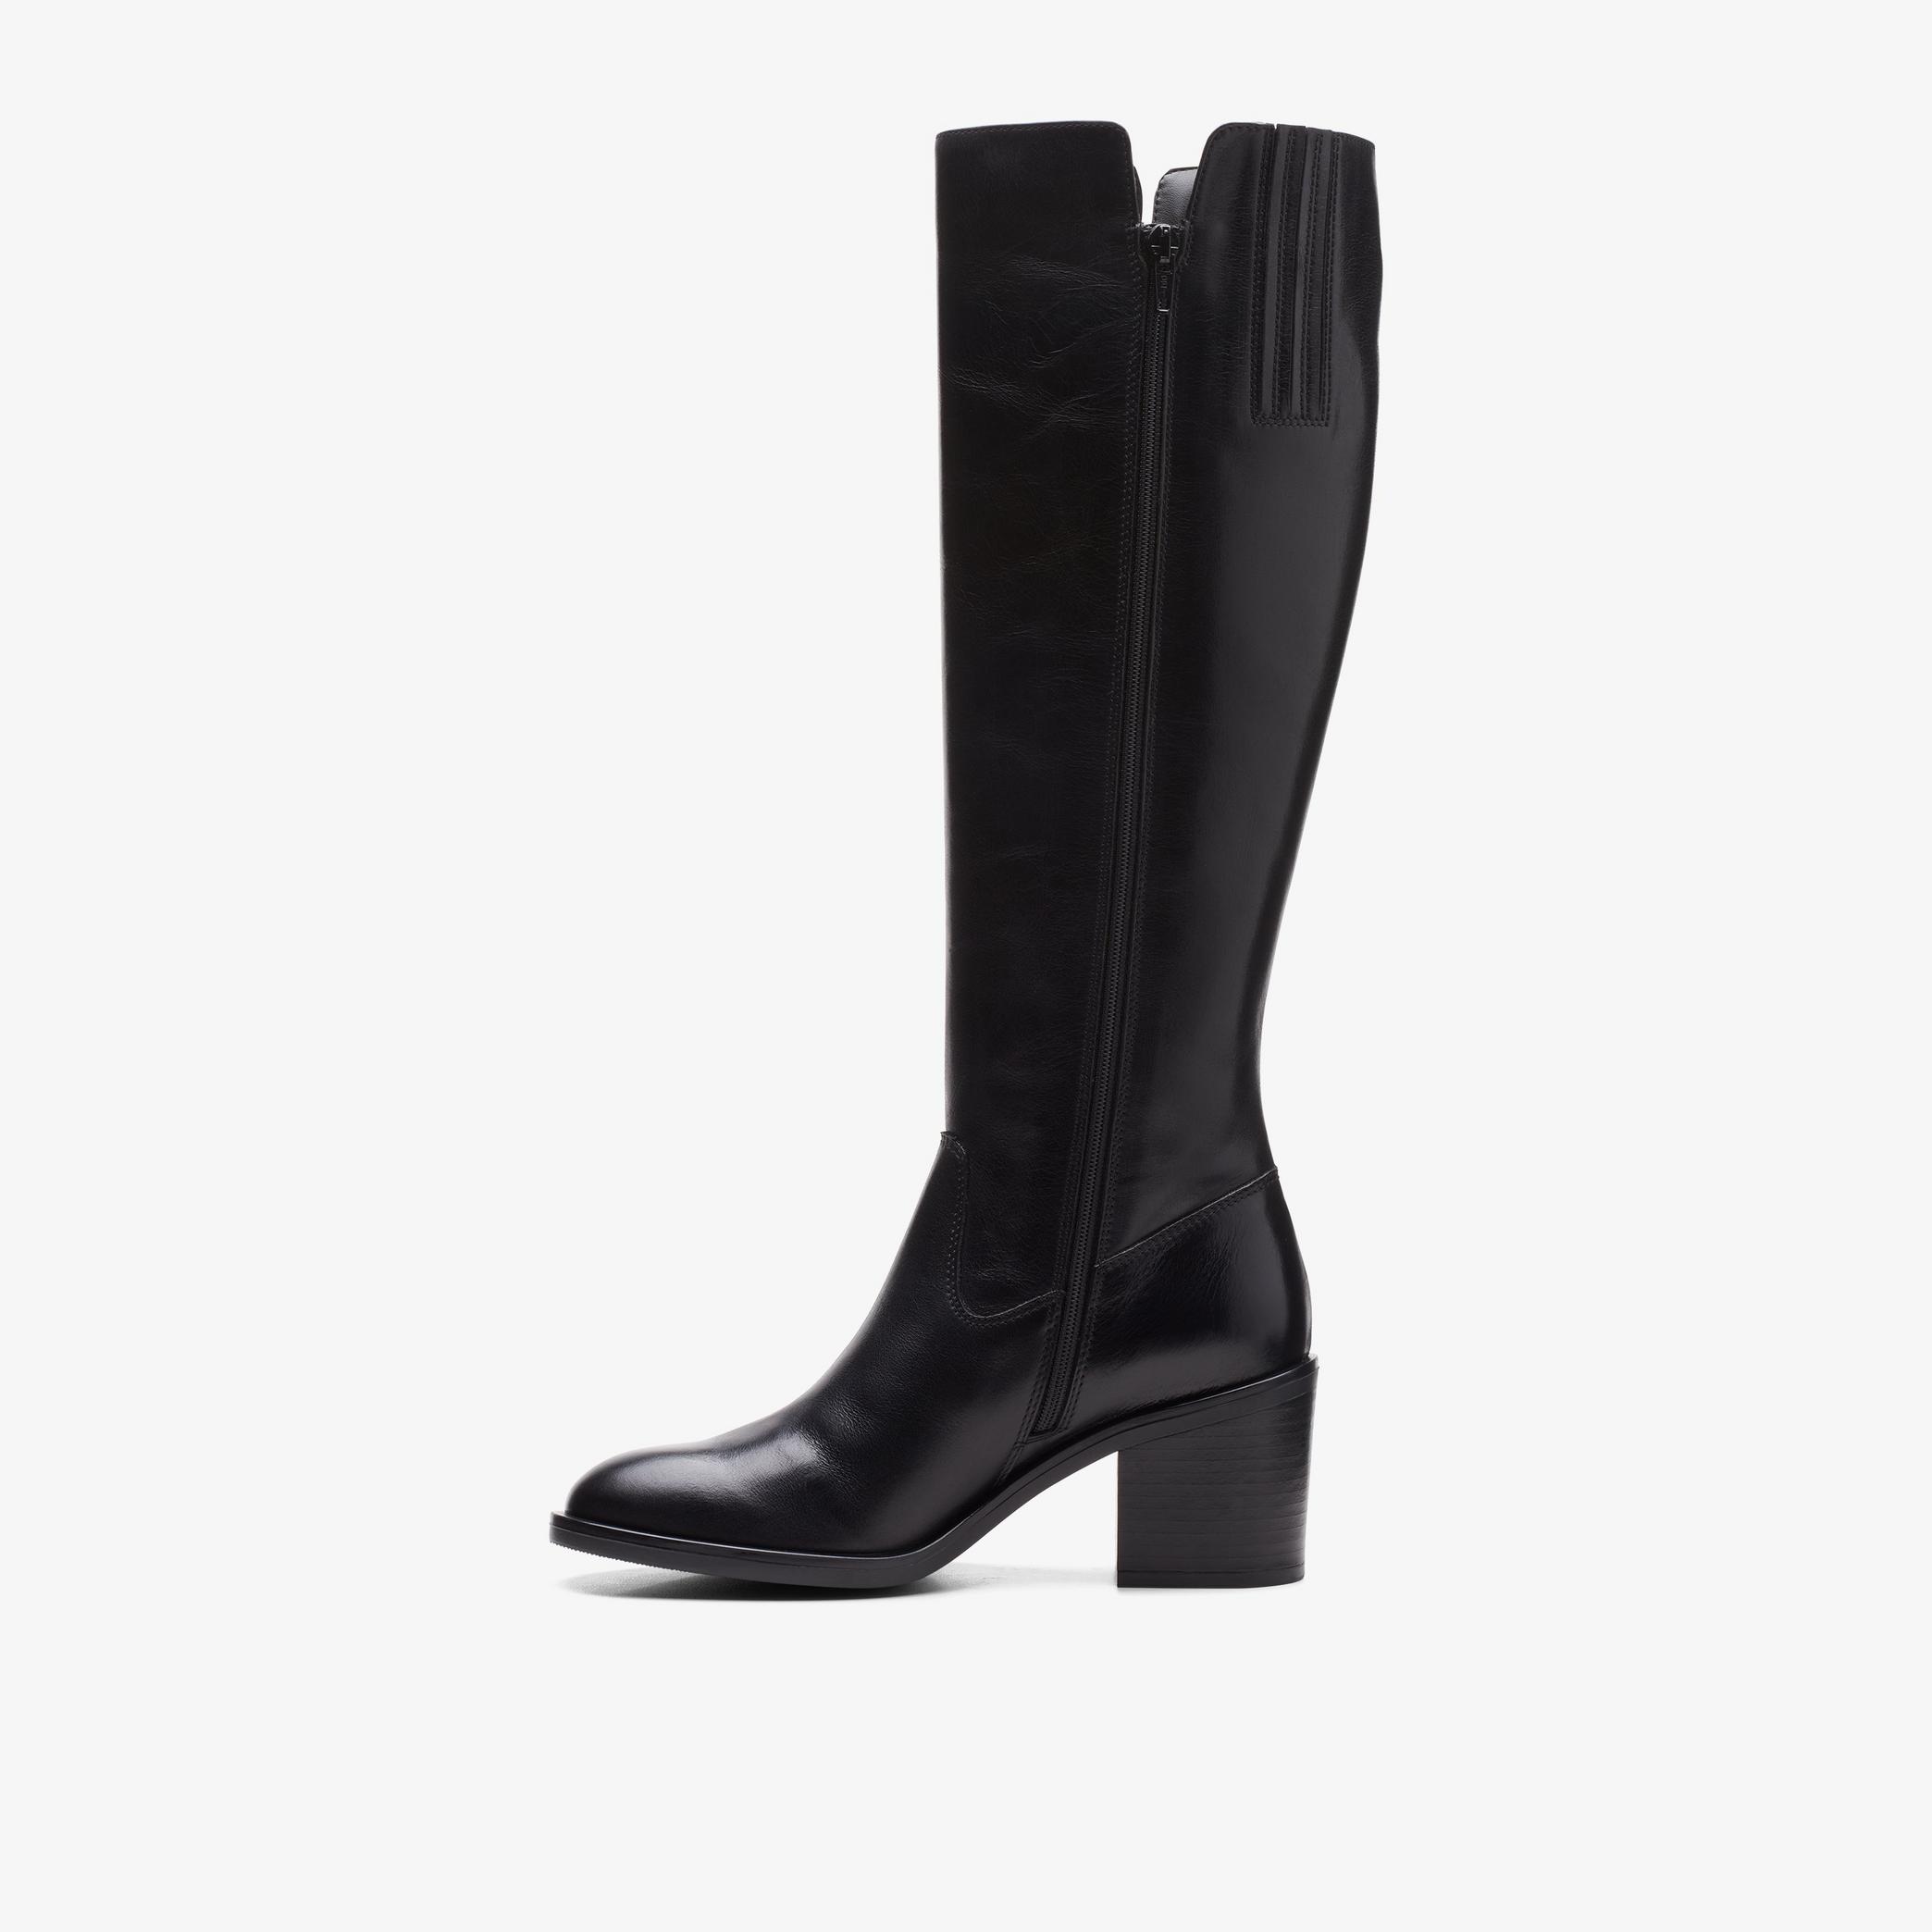 WOMENS Valvestino Hi Black Leather Knee High Boots | Clarks US